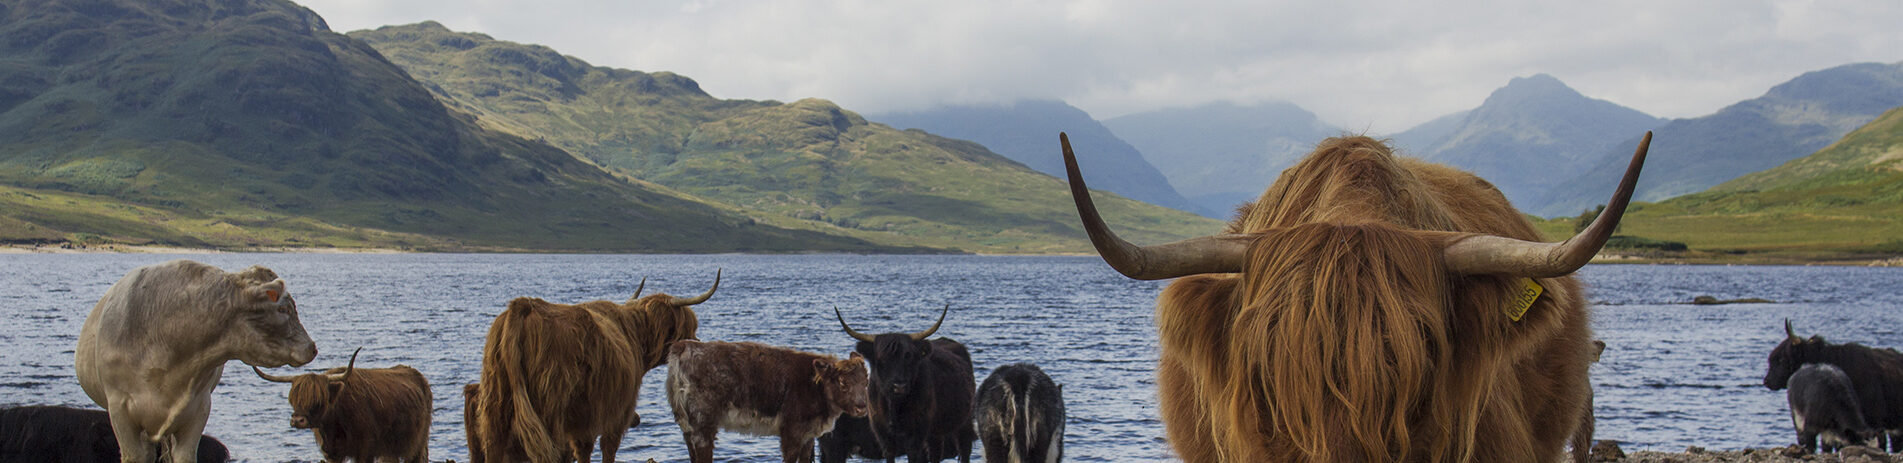 highland-cattle-on-loch-shore